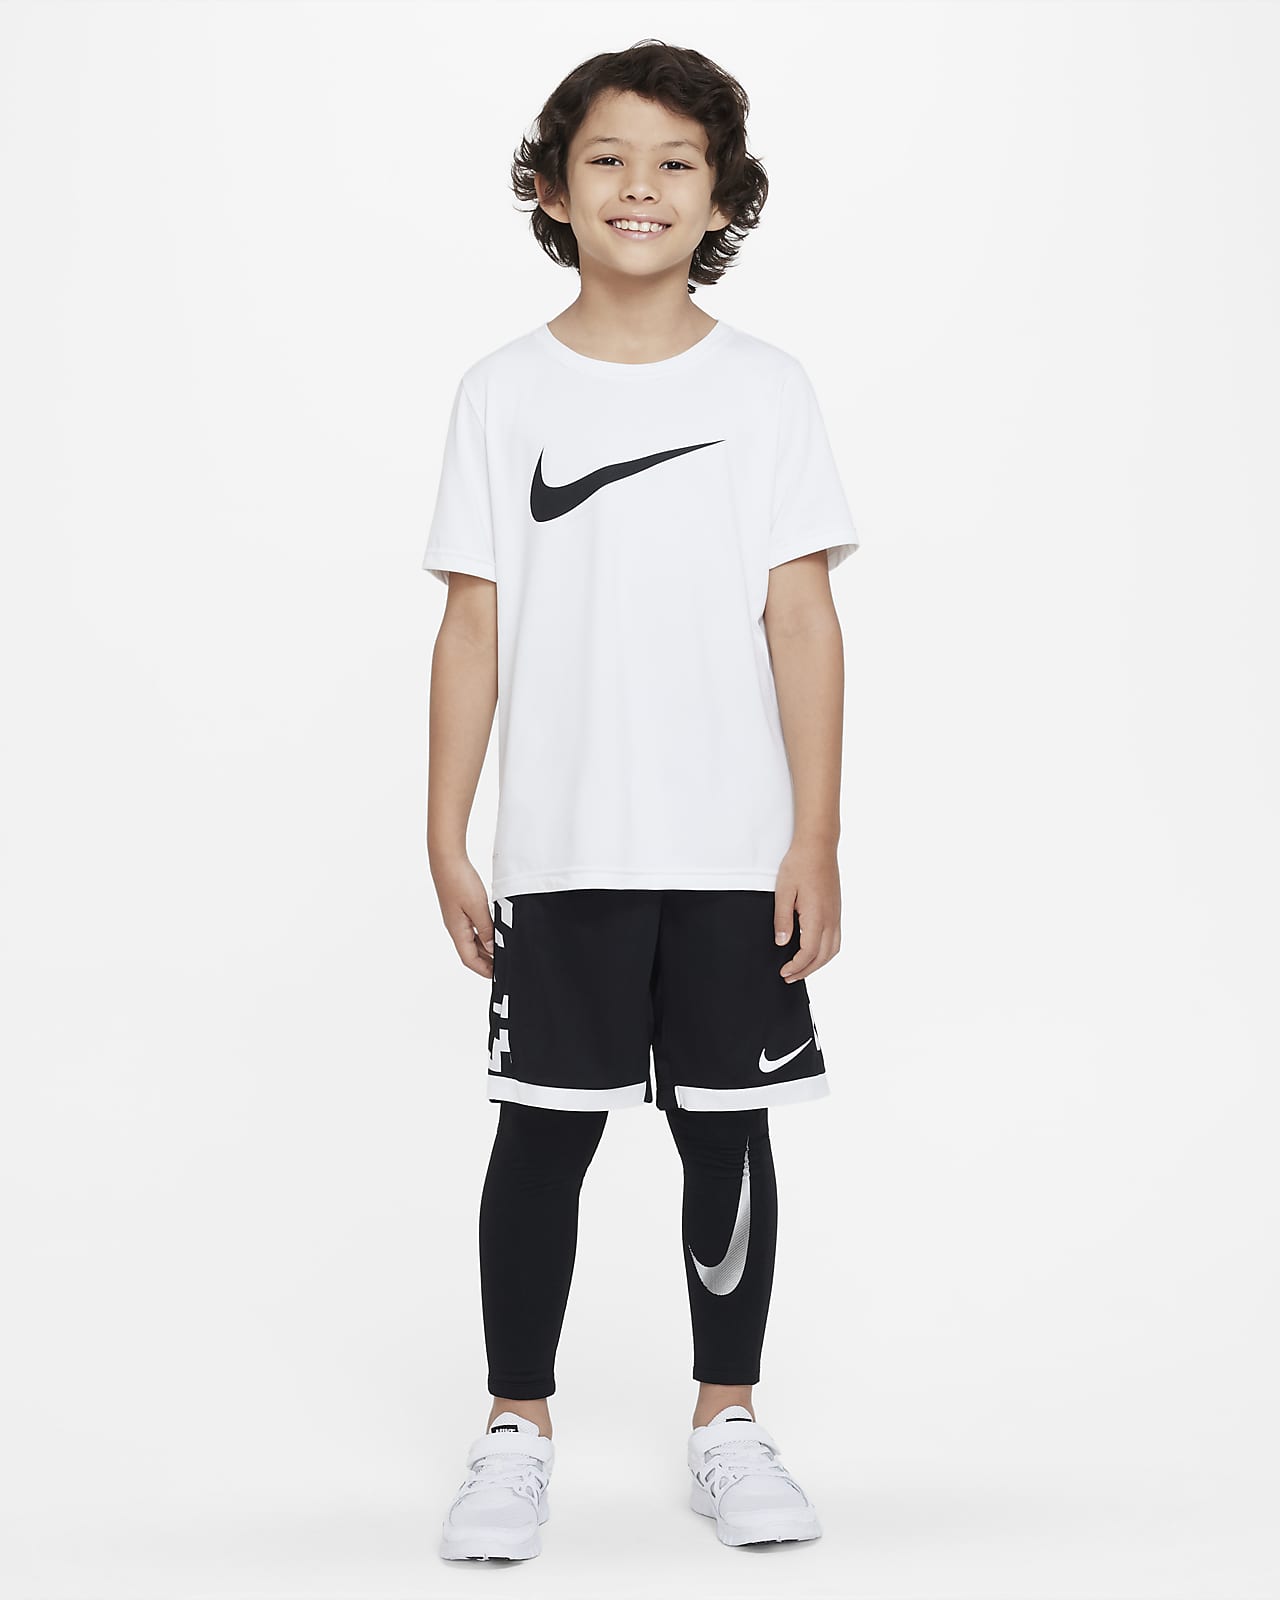 Nike Pro Warm Dri-FIT Genç Çocuk (Erkek) Taytı